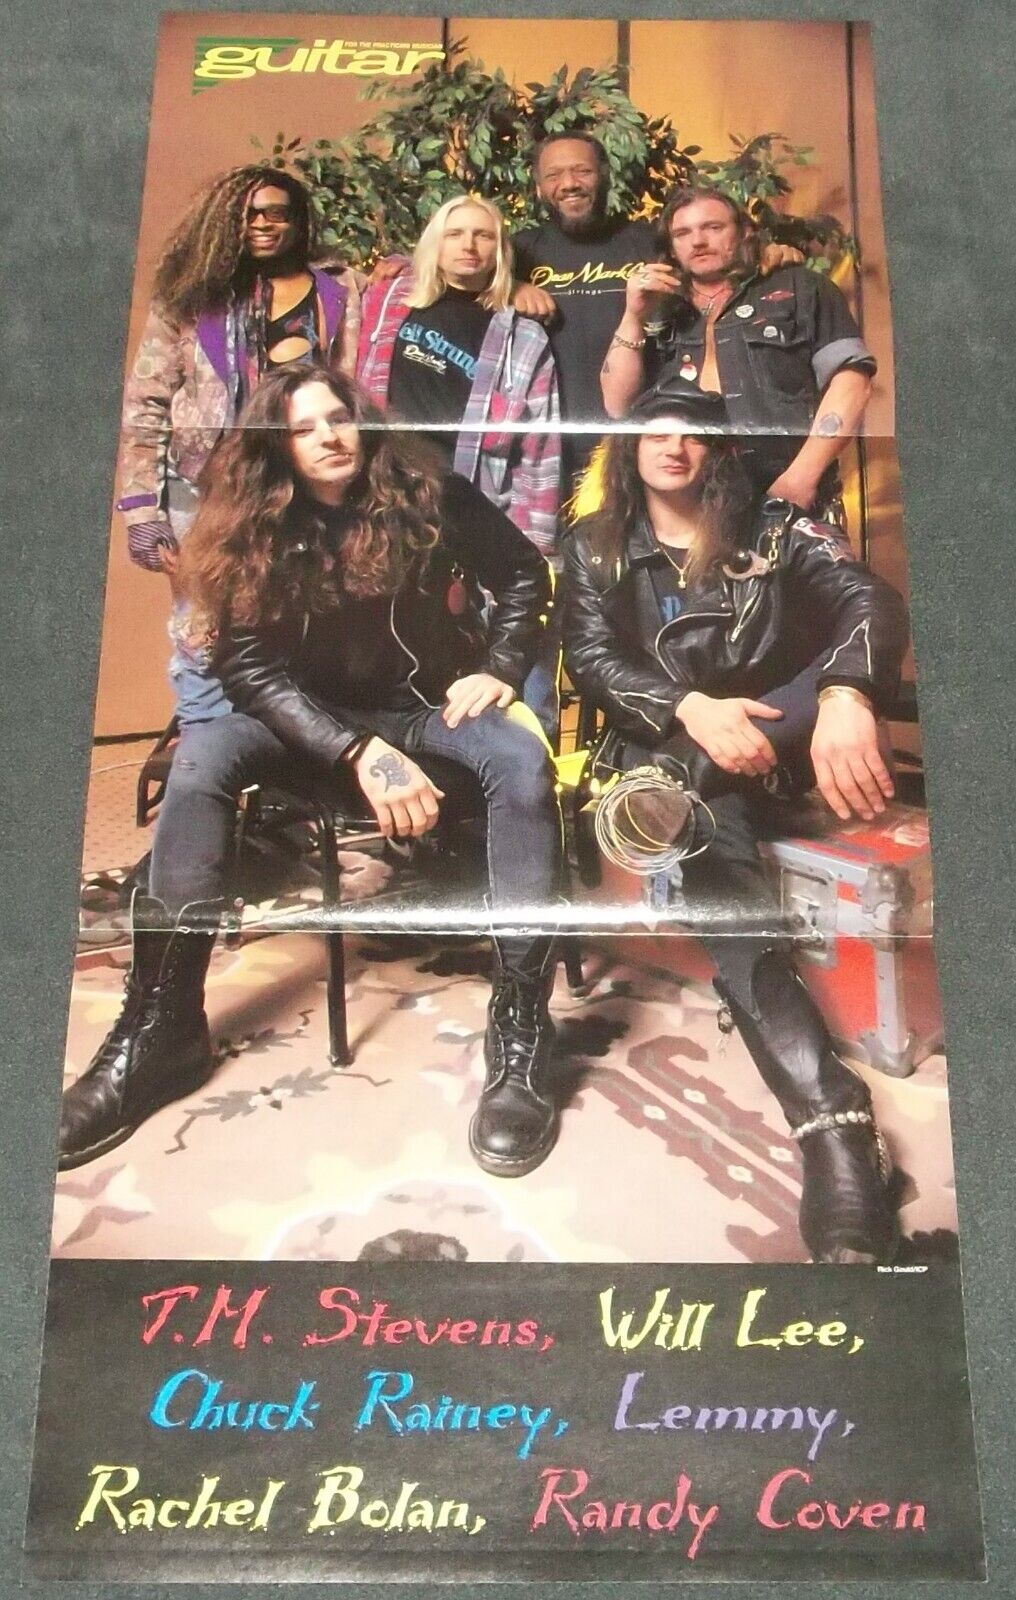 Bass Guitar Heroes Lemmy T.M. Stevens Rachel Bolan 3-page centerfold poster